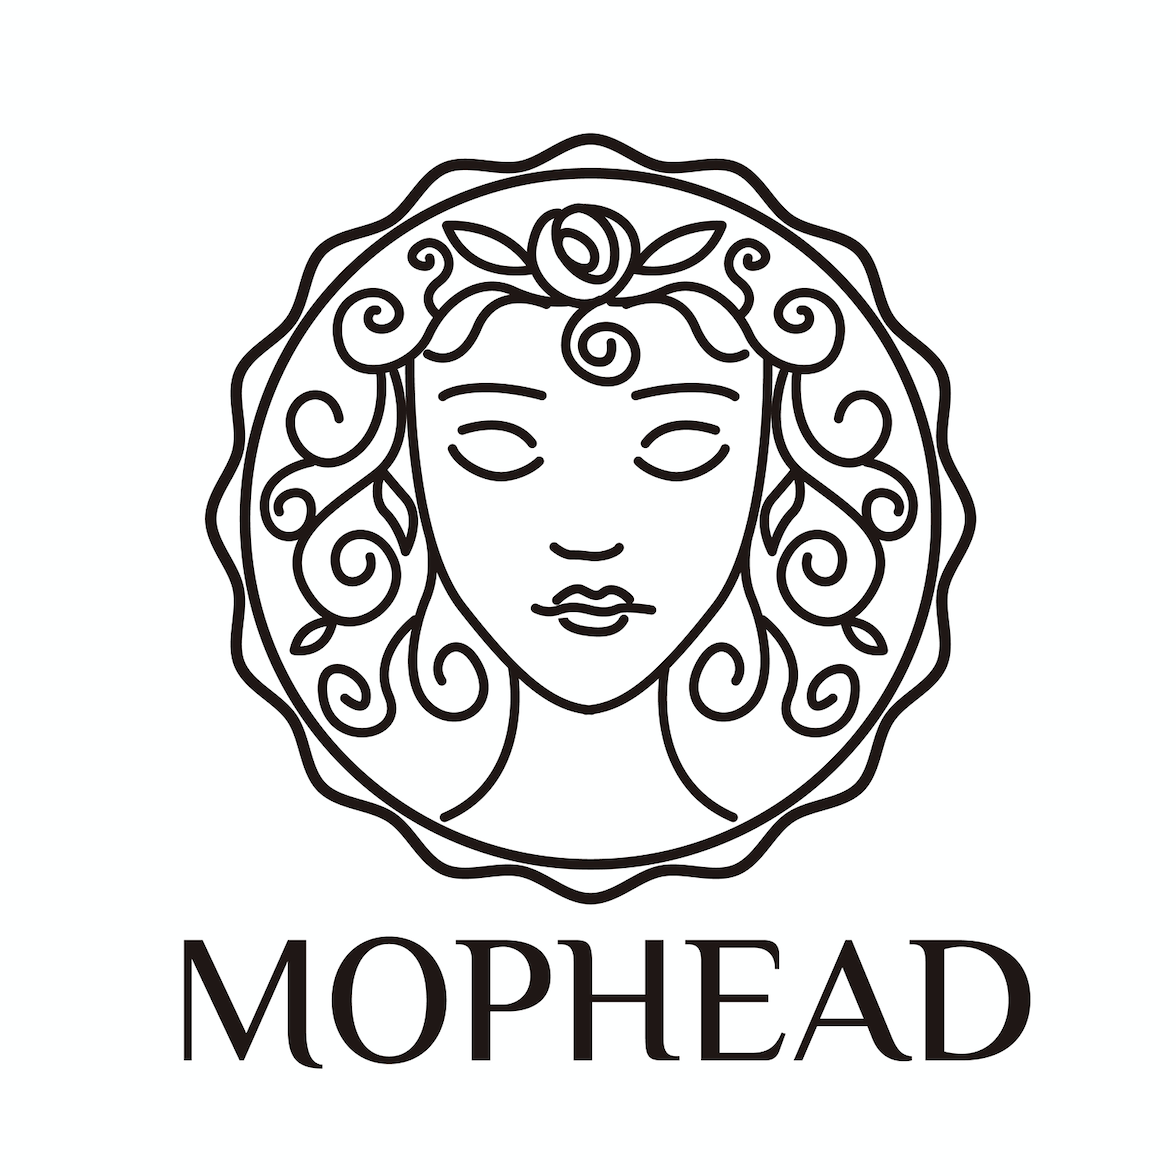 Mophead logo (white base)